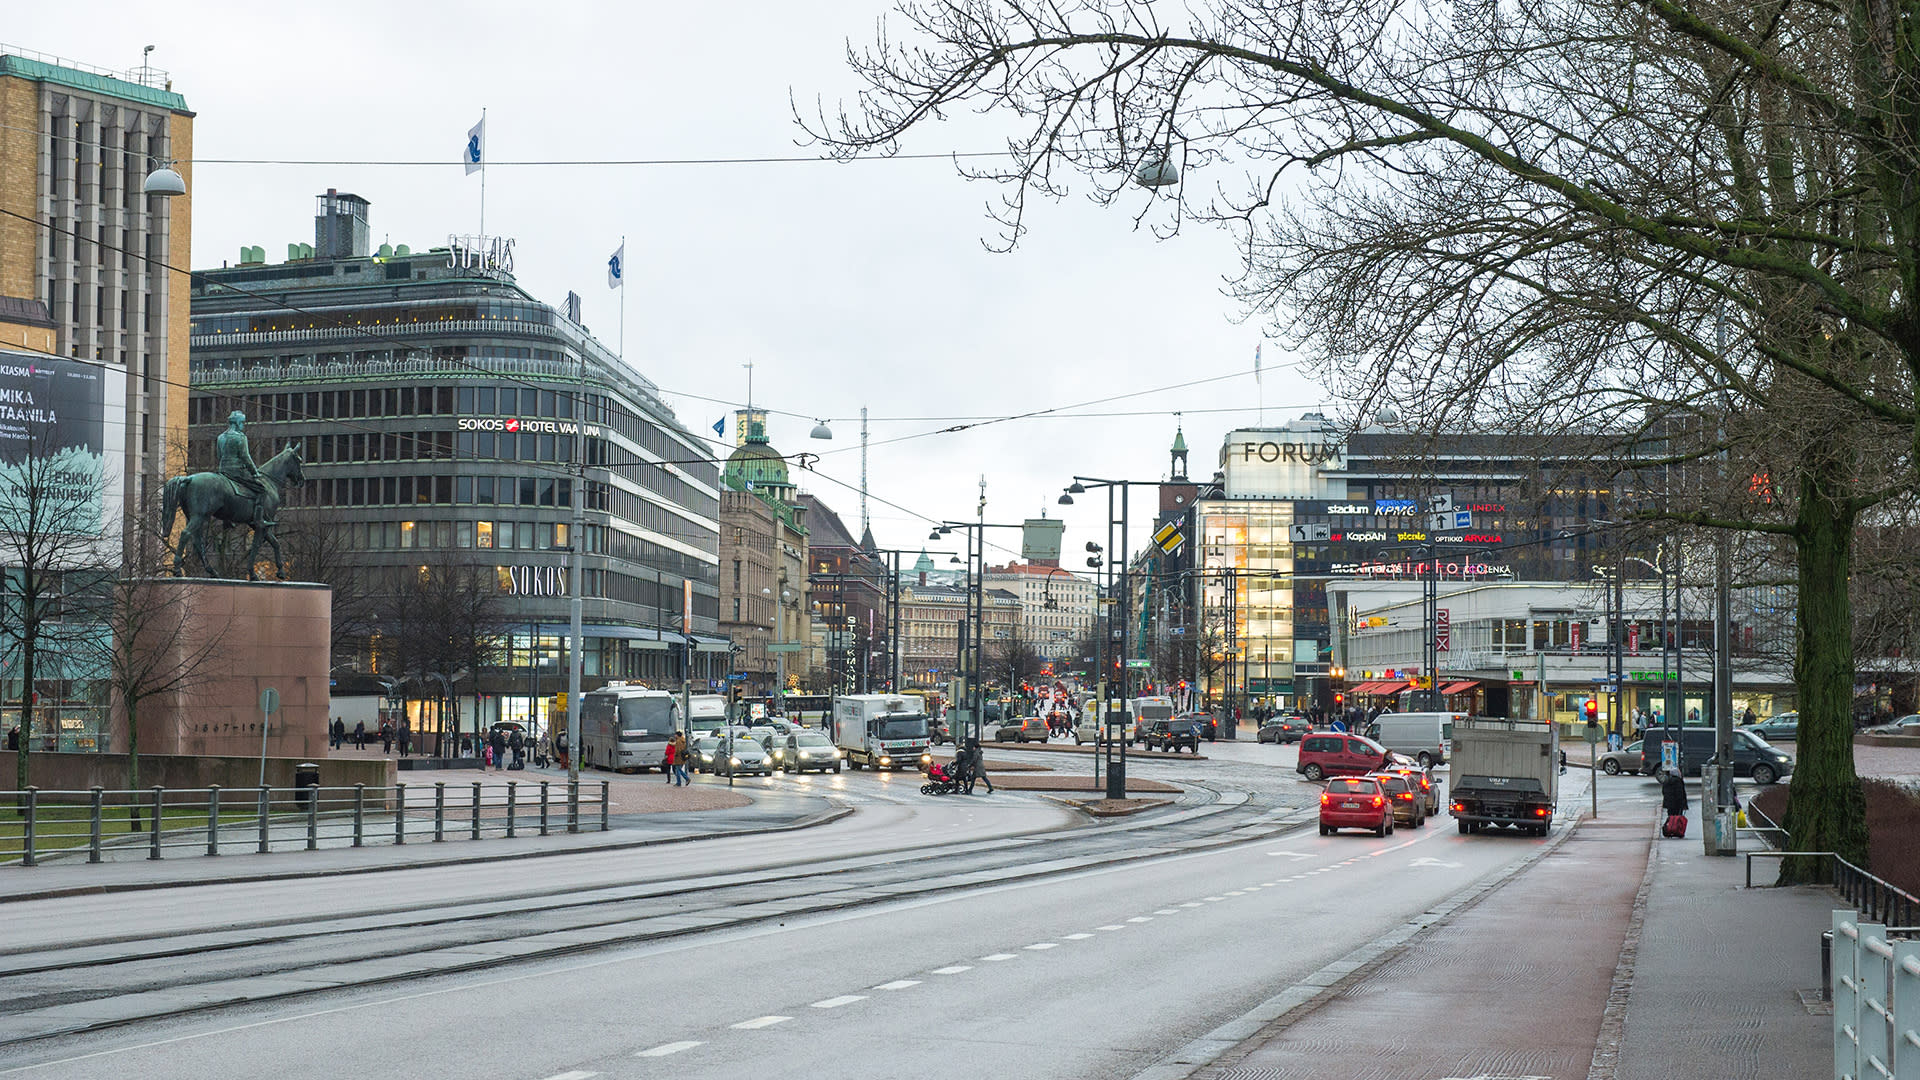 Helsinki is starting its “biggest” street improvement project